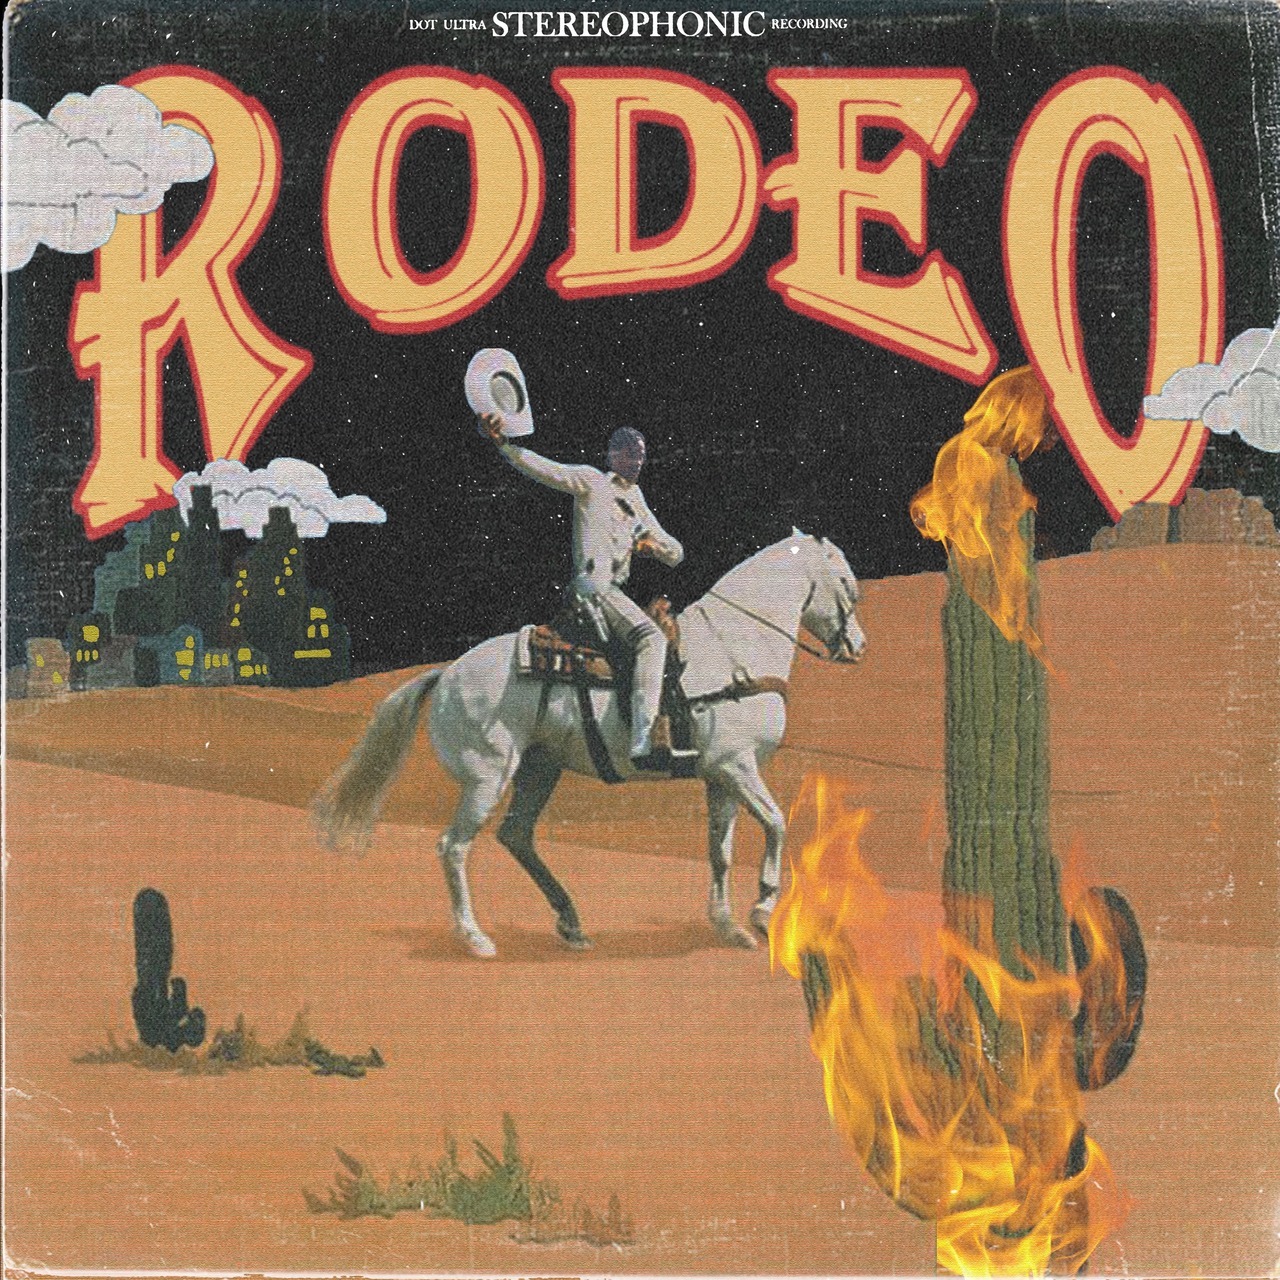 TOMMY - Travis Scott - Rodeo (vintage vinyl cover) ©2016